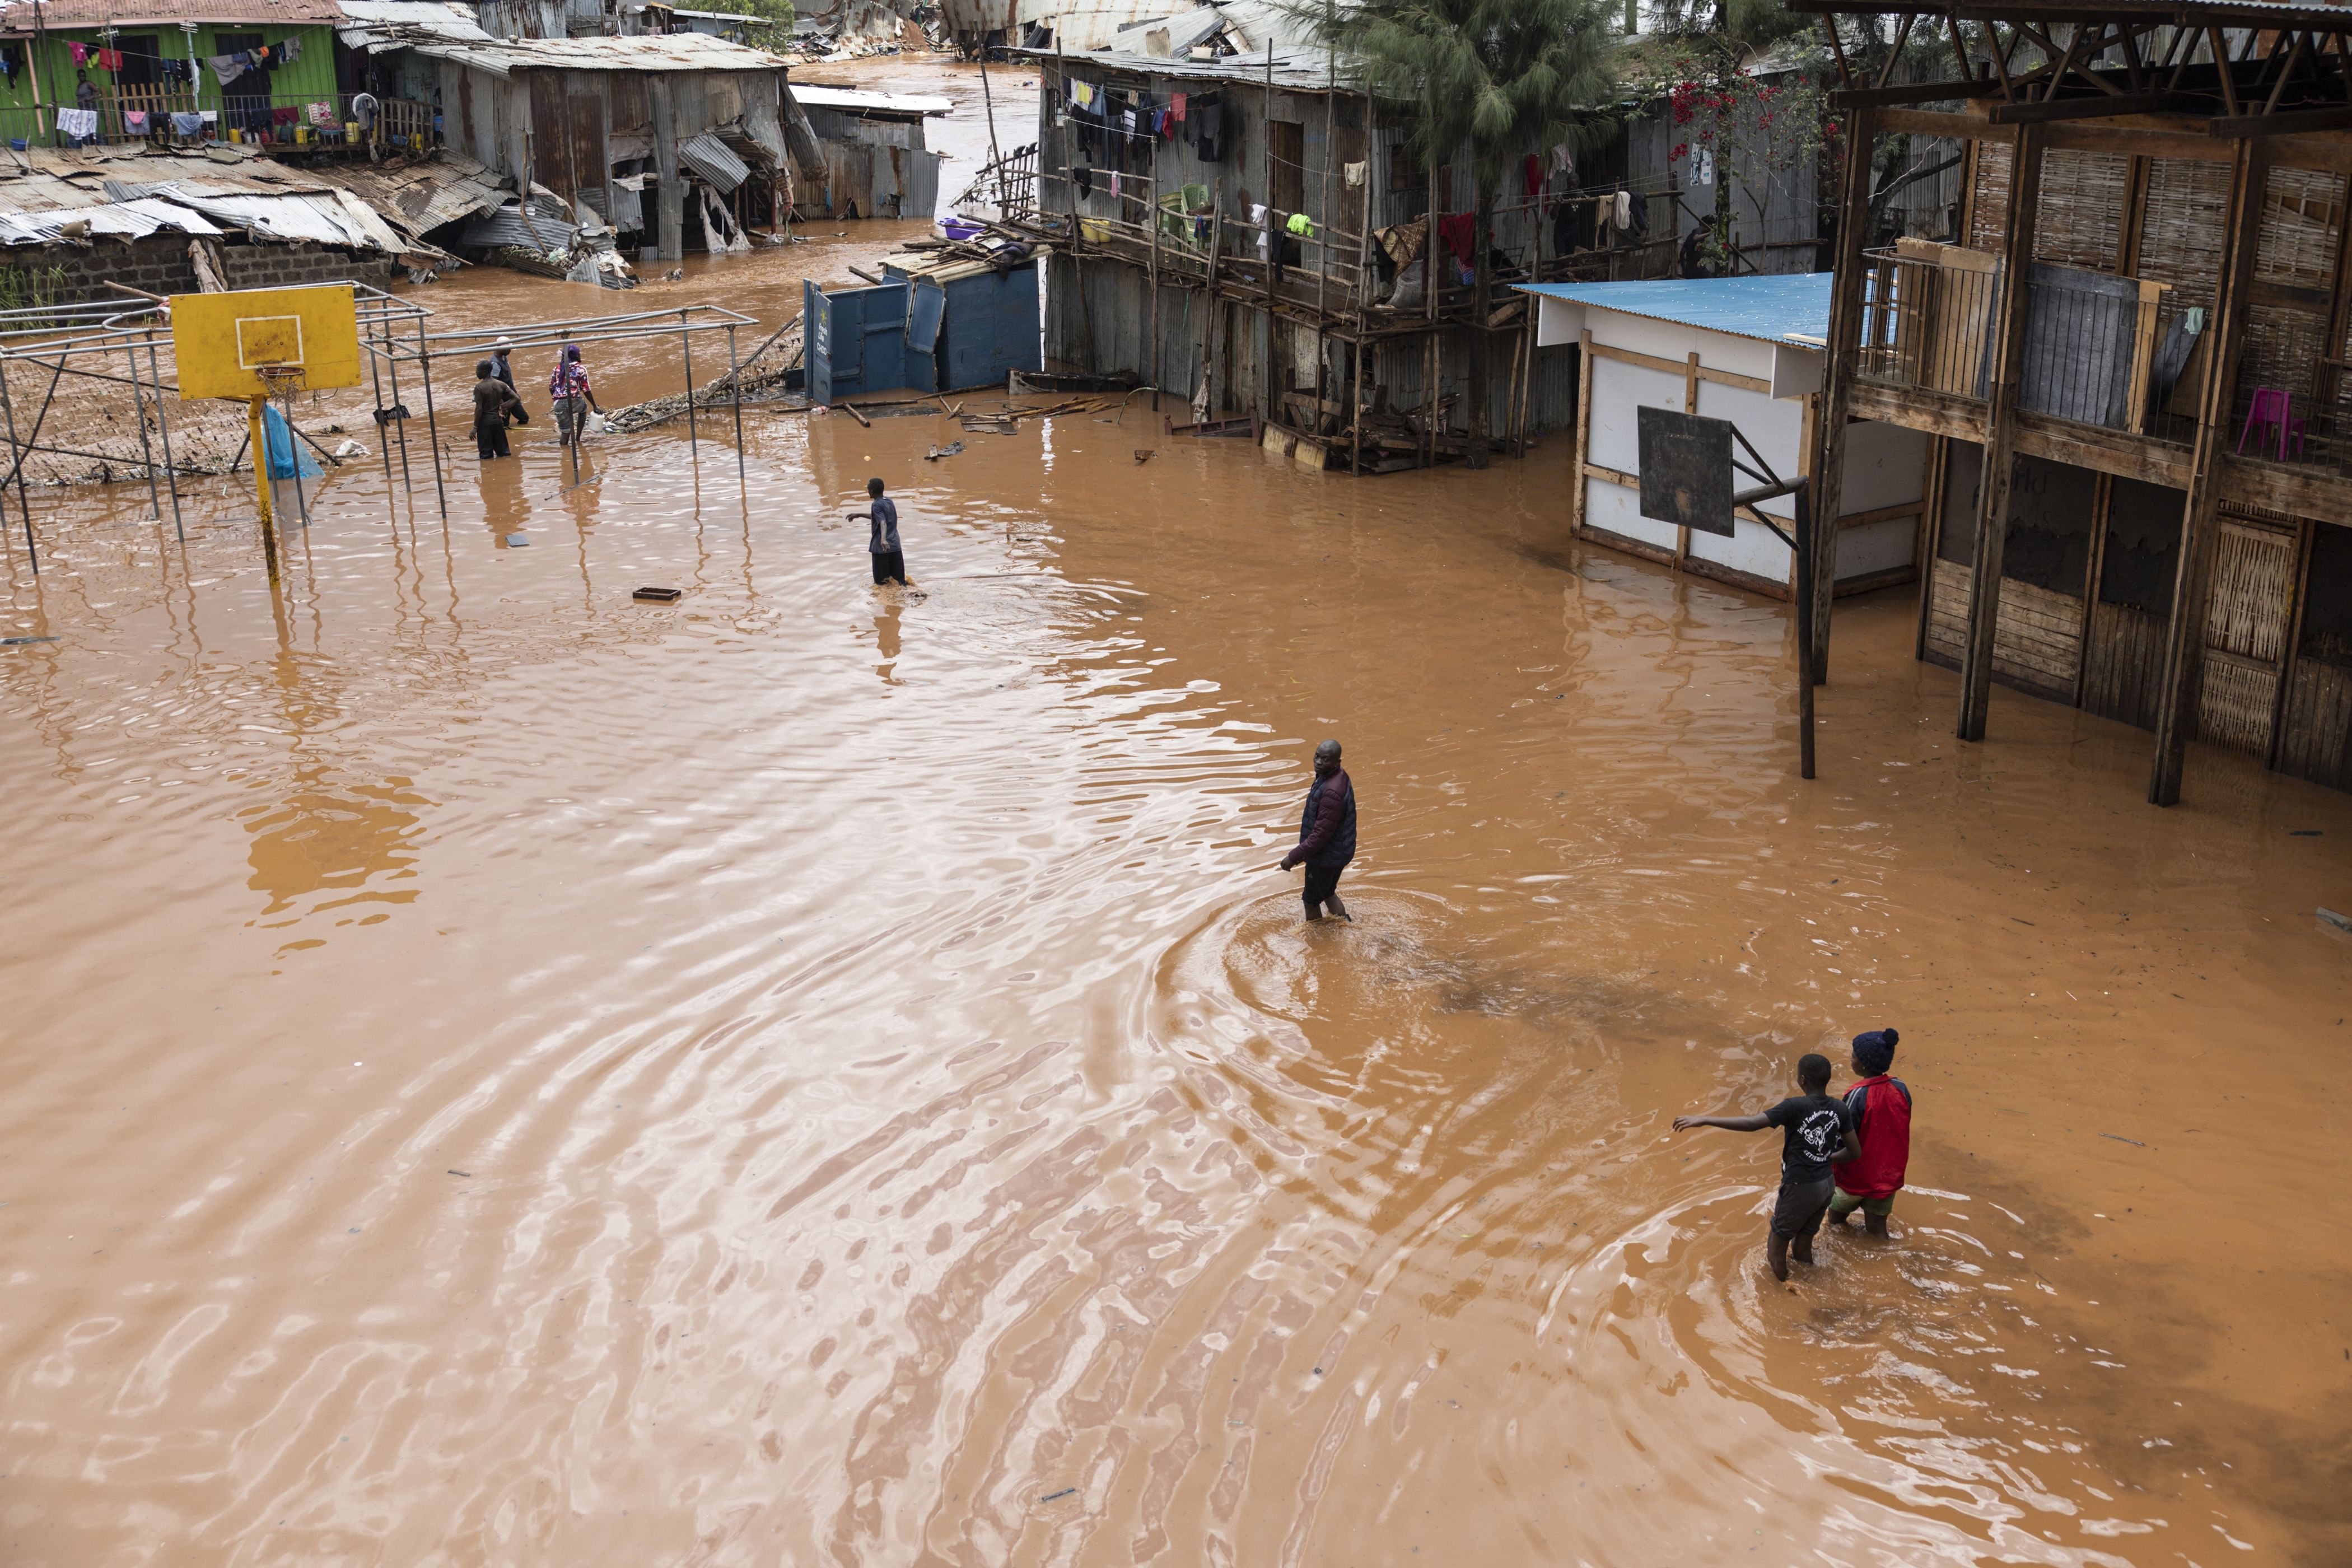  فيضانات كينيا تخلف 70 قتيلاً منذ مارس .